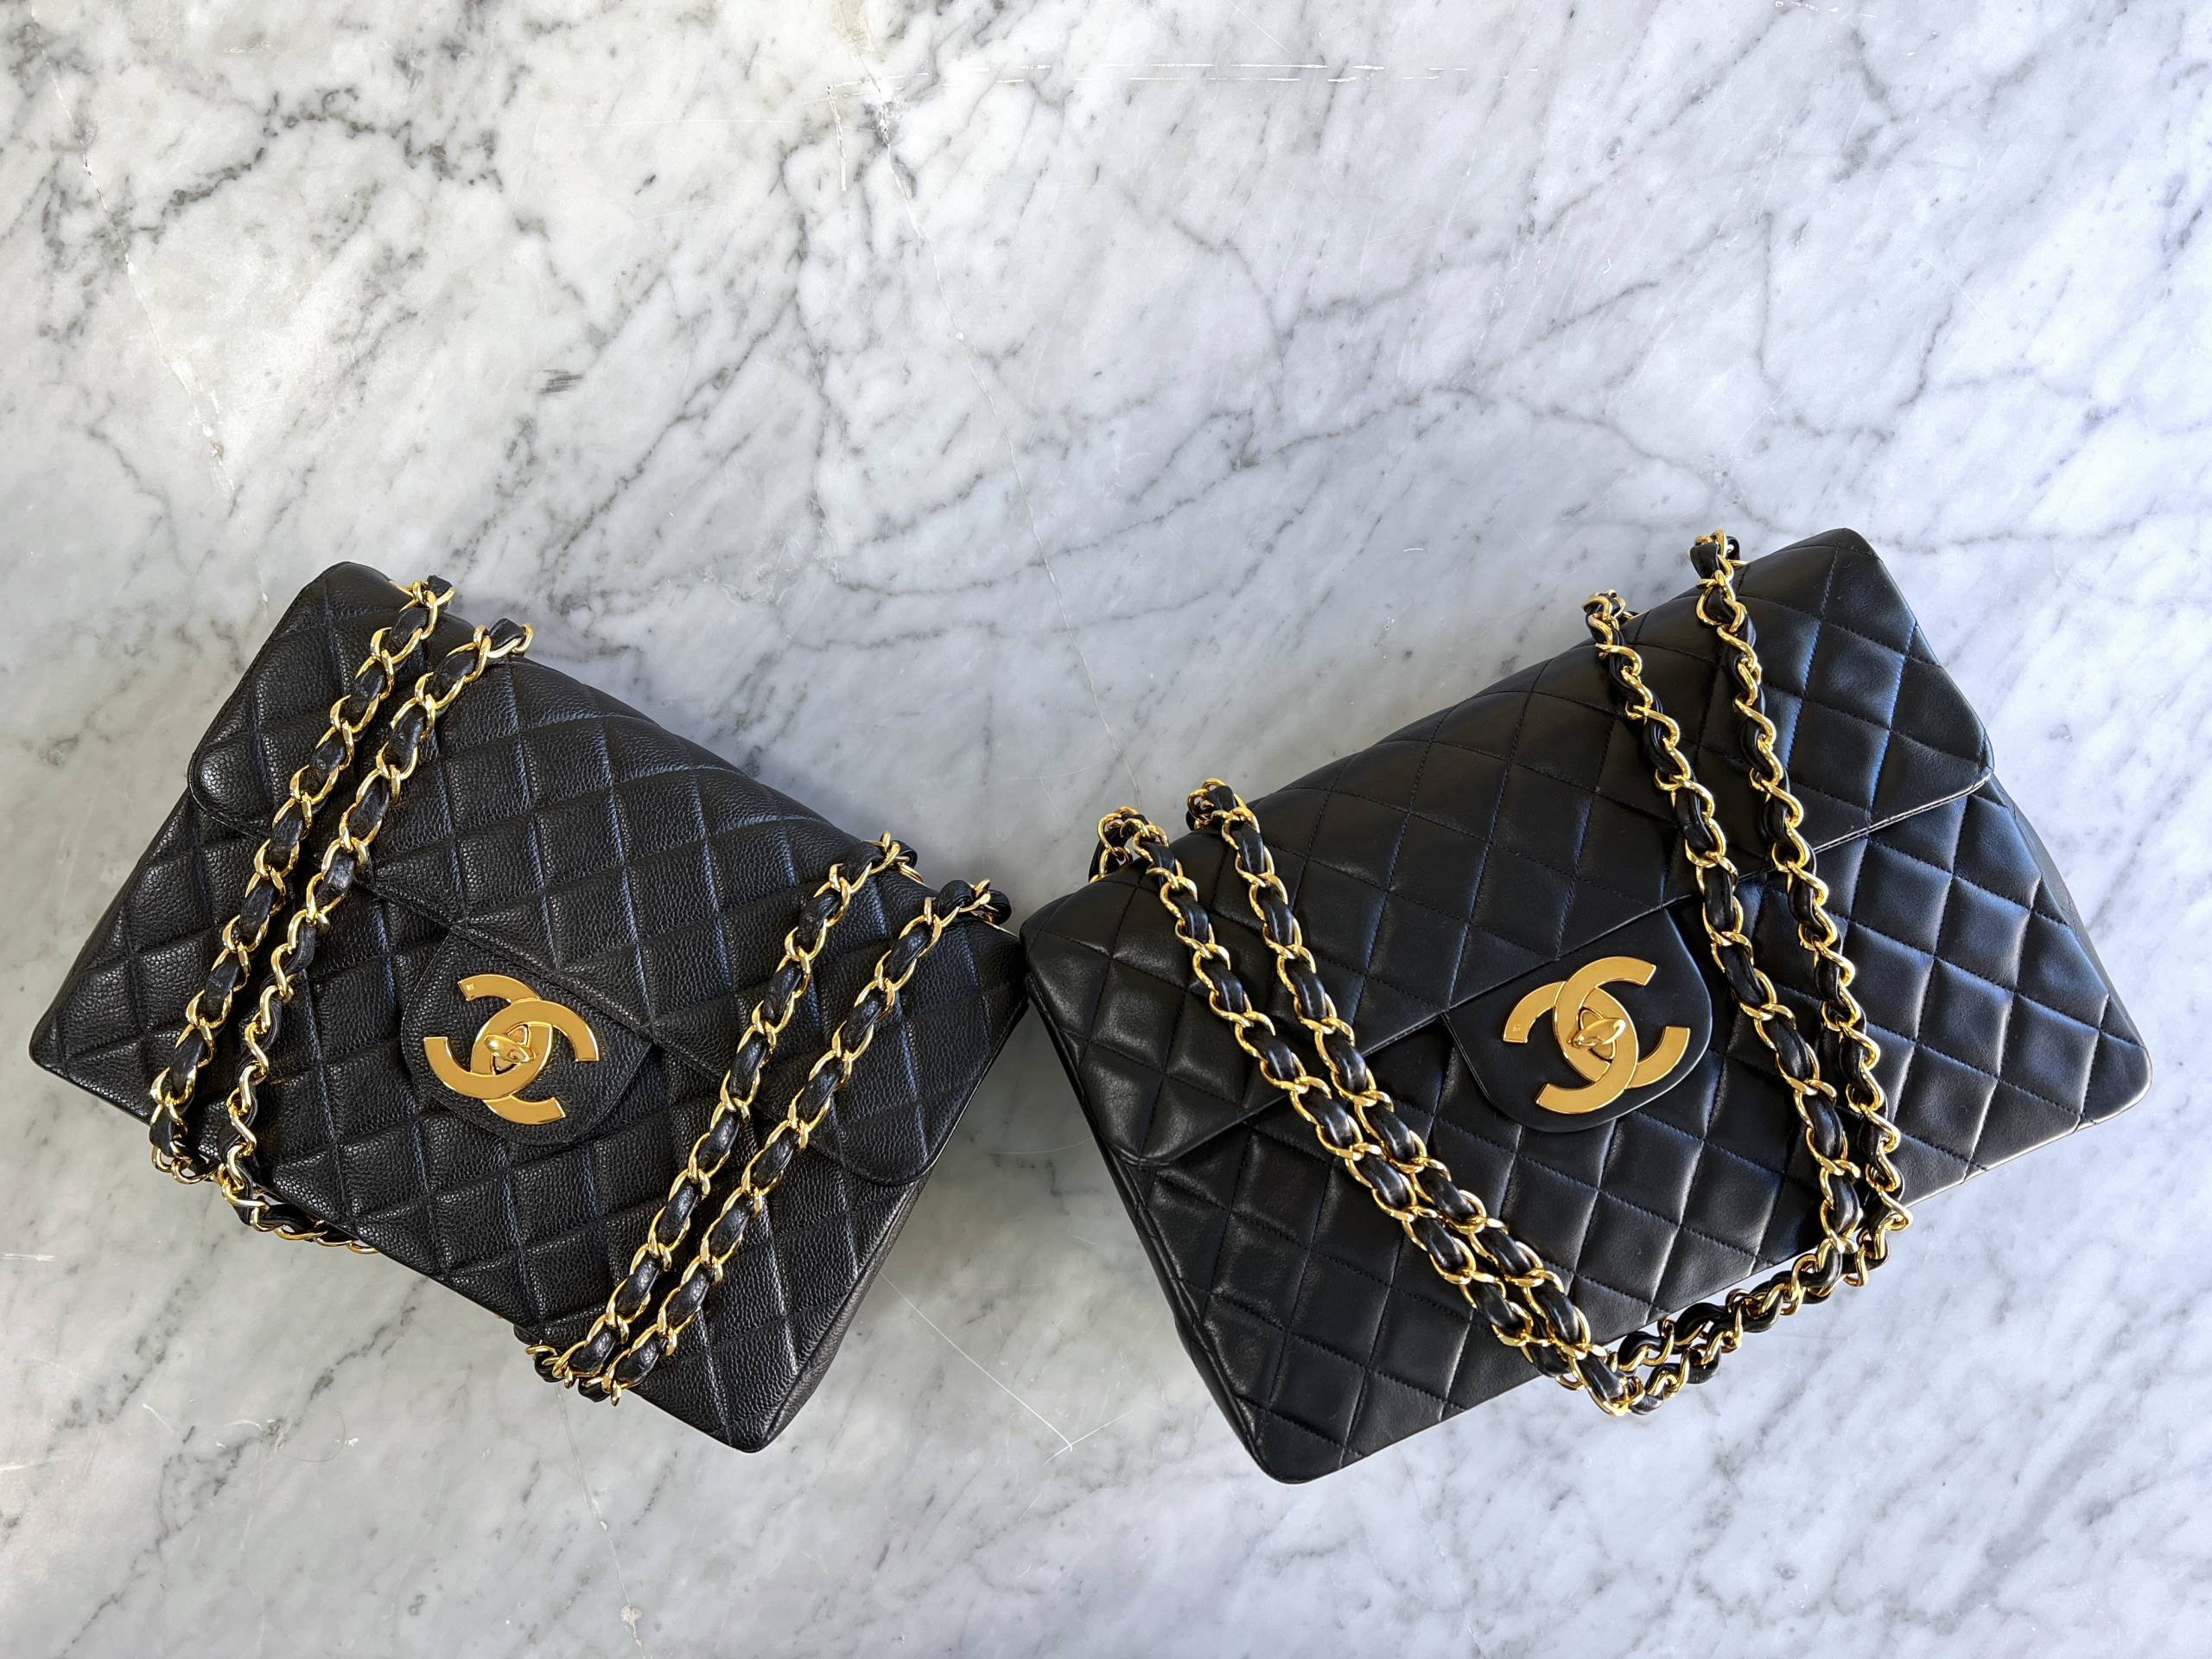 Vintage Chanel Handbags  Purses for sale online  Invaluable